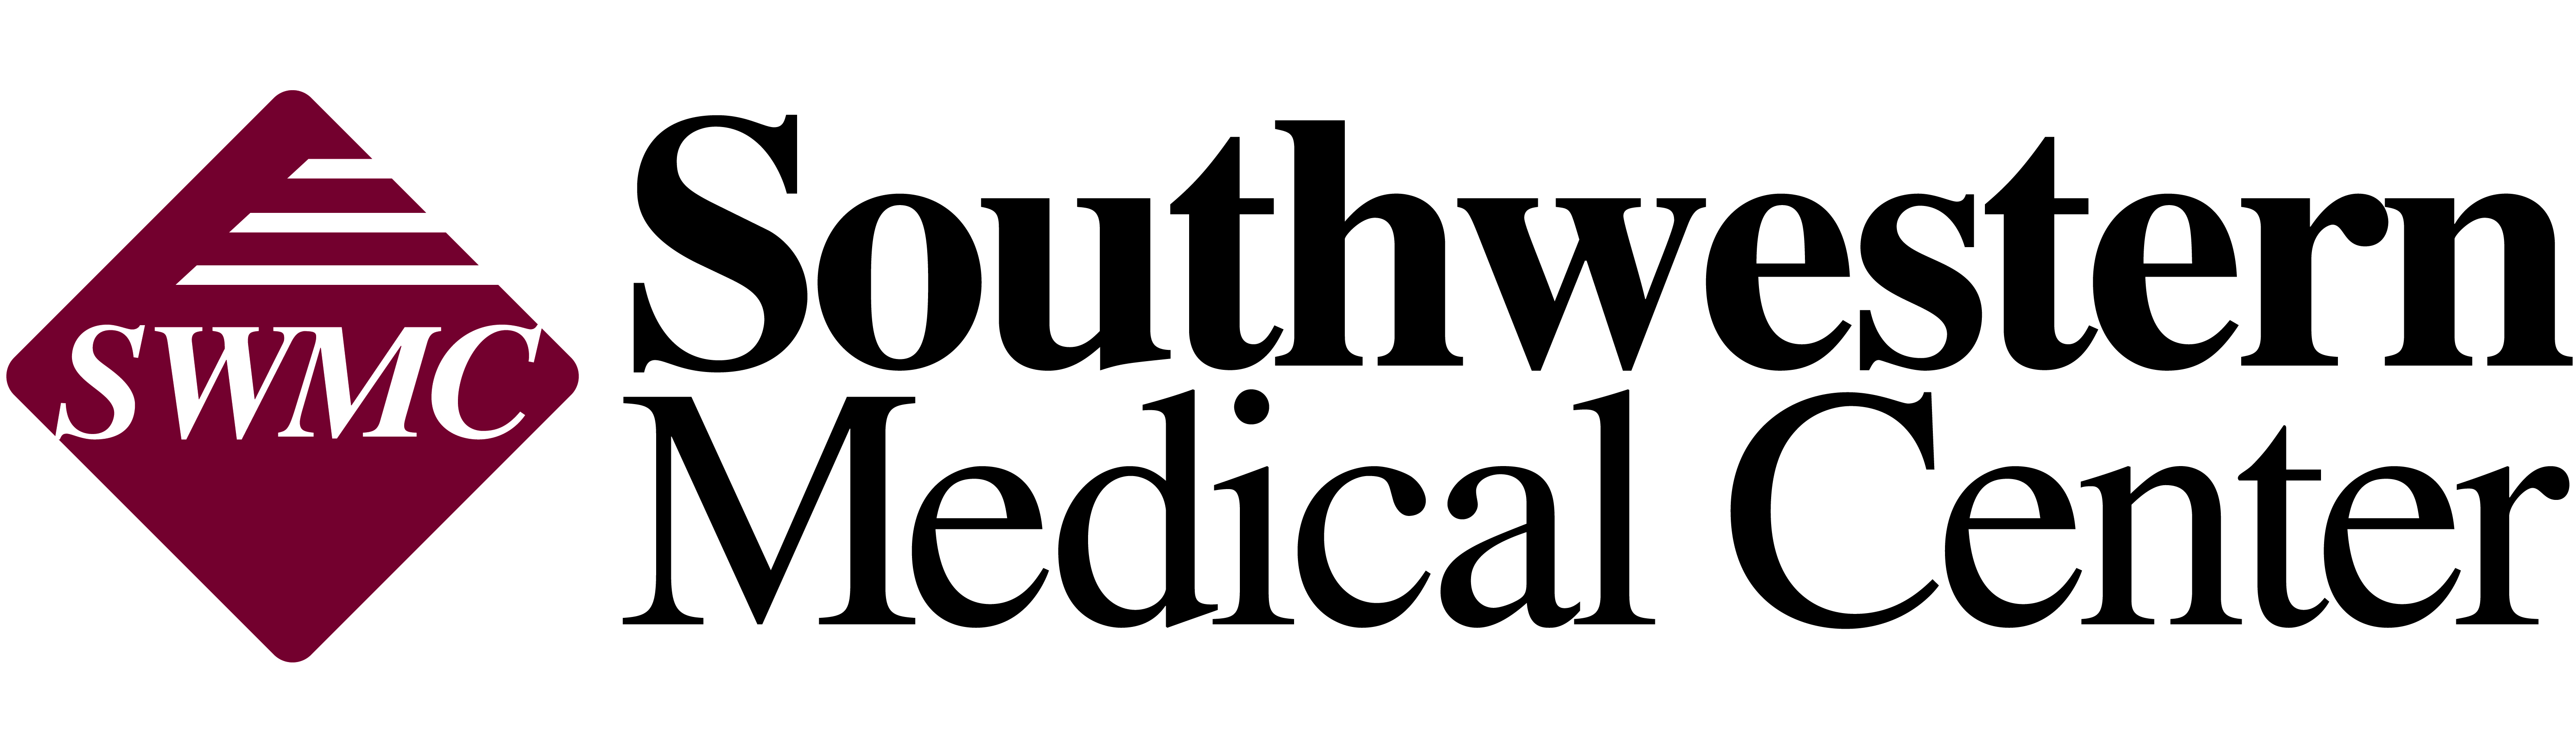 H. Southwestern Medical Center (Nivel 4)